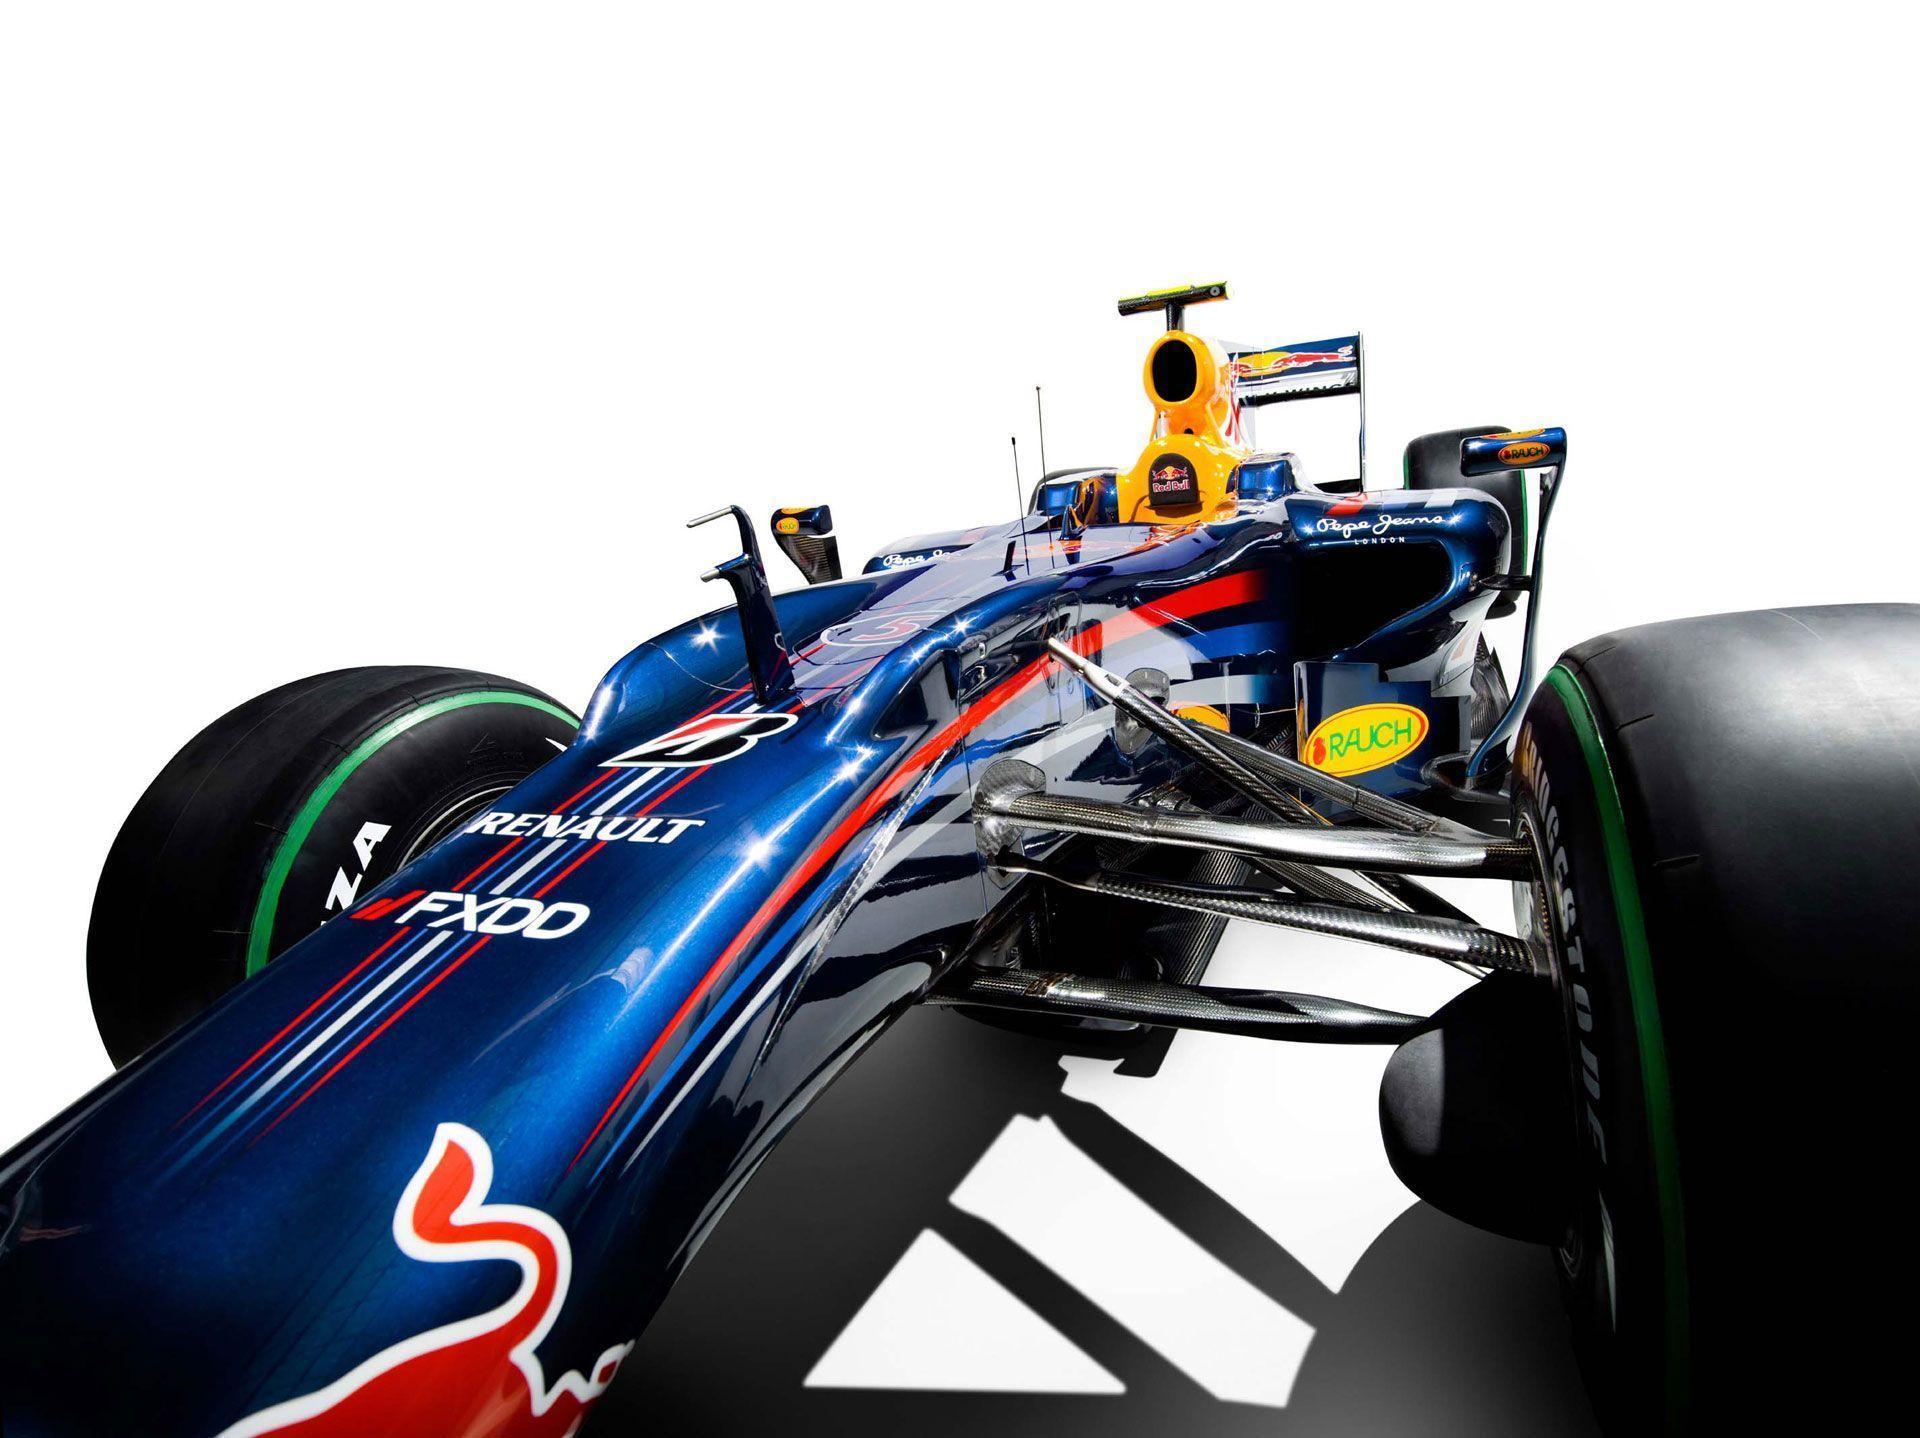 Presentation Red Bull RB6. F1 wallpaper 2010 (HIGH RESOLUTION PHOTOS)